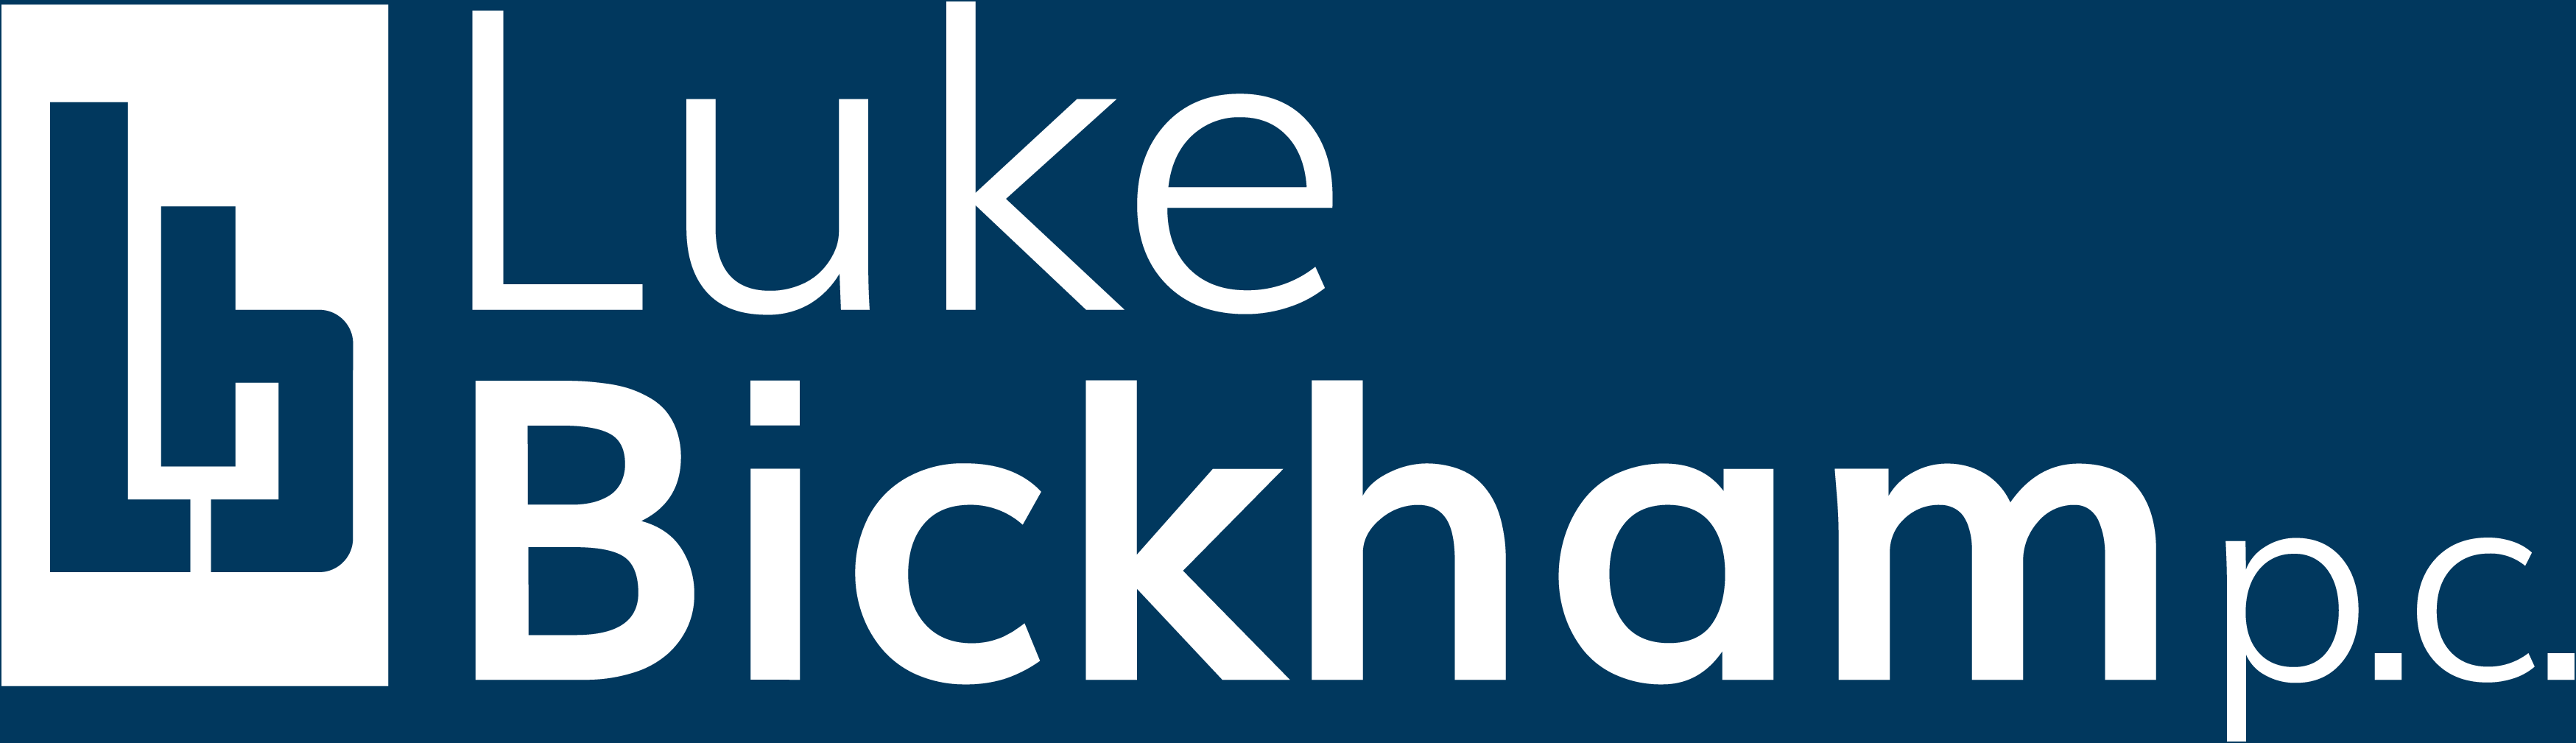 luke-bickham-dallas-personal-injury-lawyer-logo-w (1)